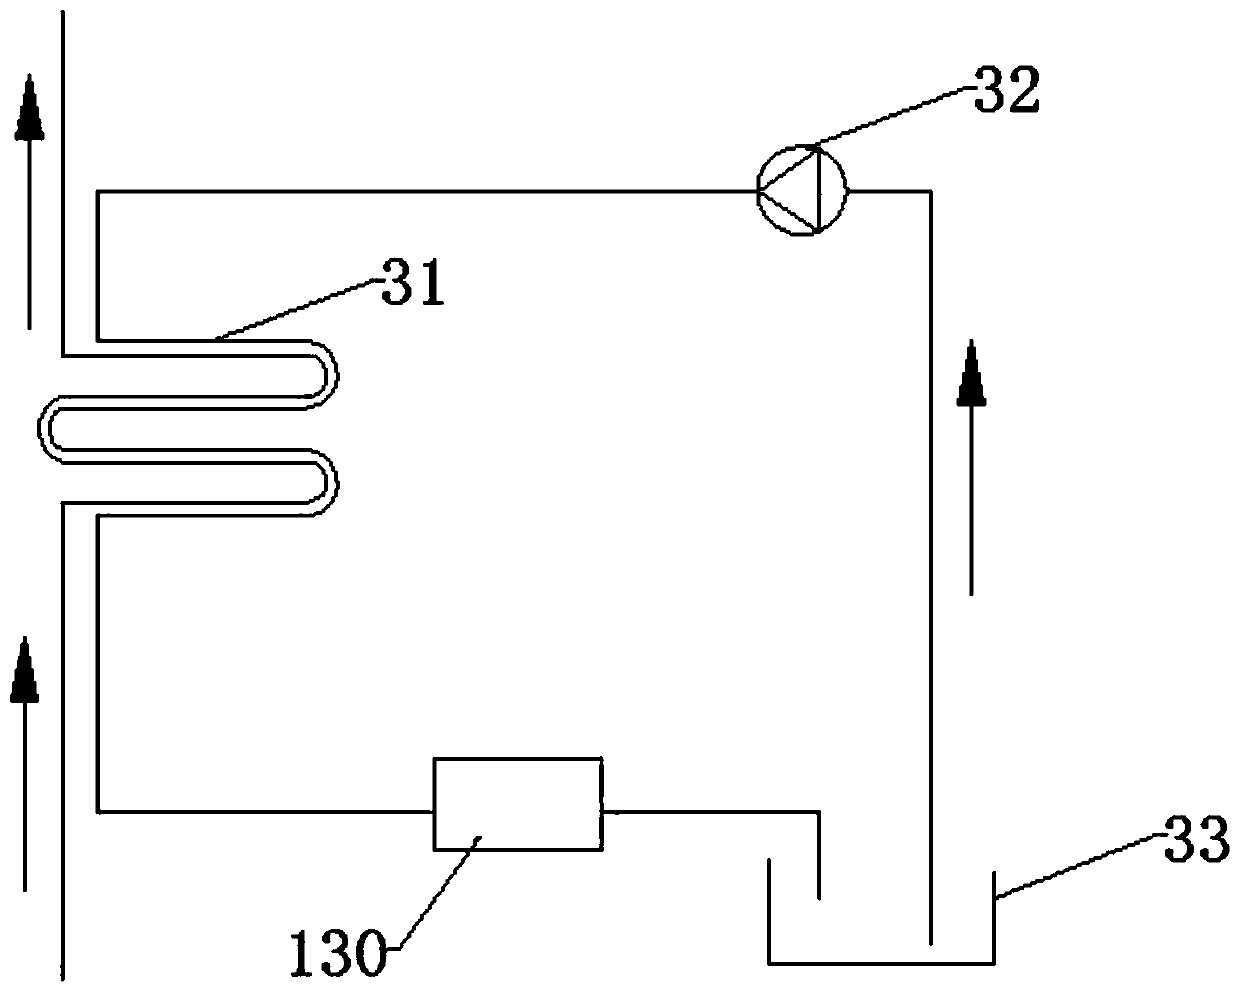 A flue gas desulfurization system